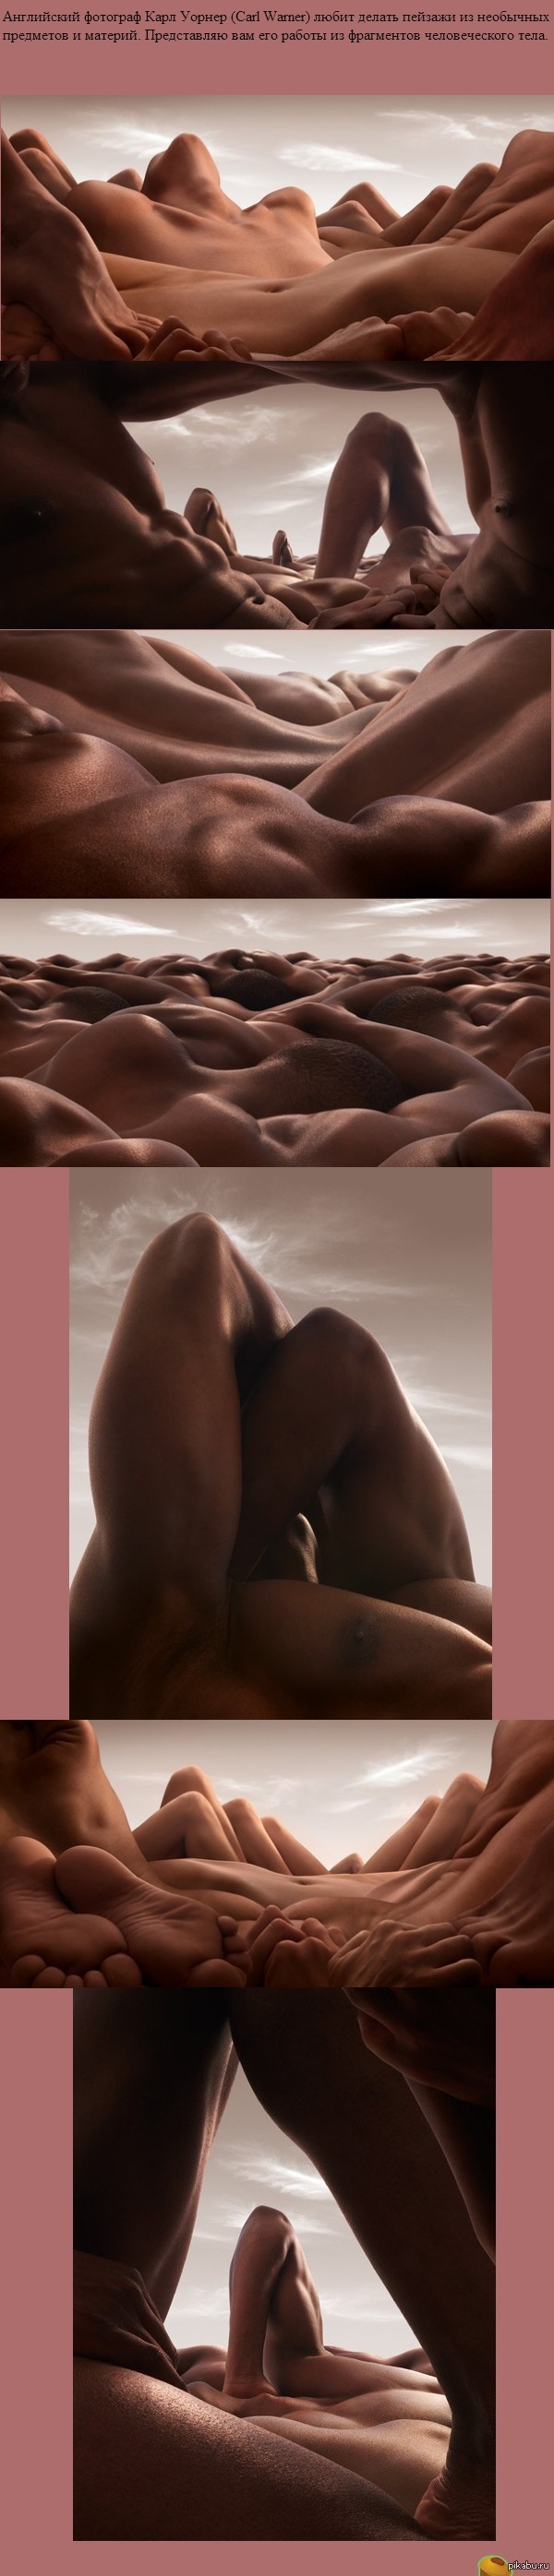 Landscapes of body parts - NSFW, Body, Landscape, beauty, The photo, Longpost